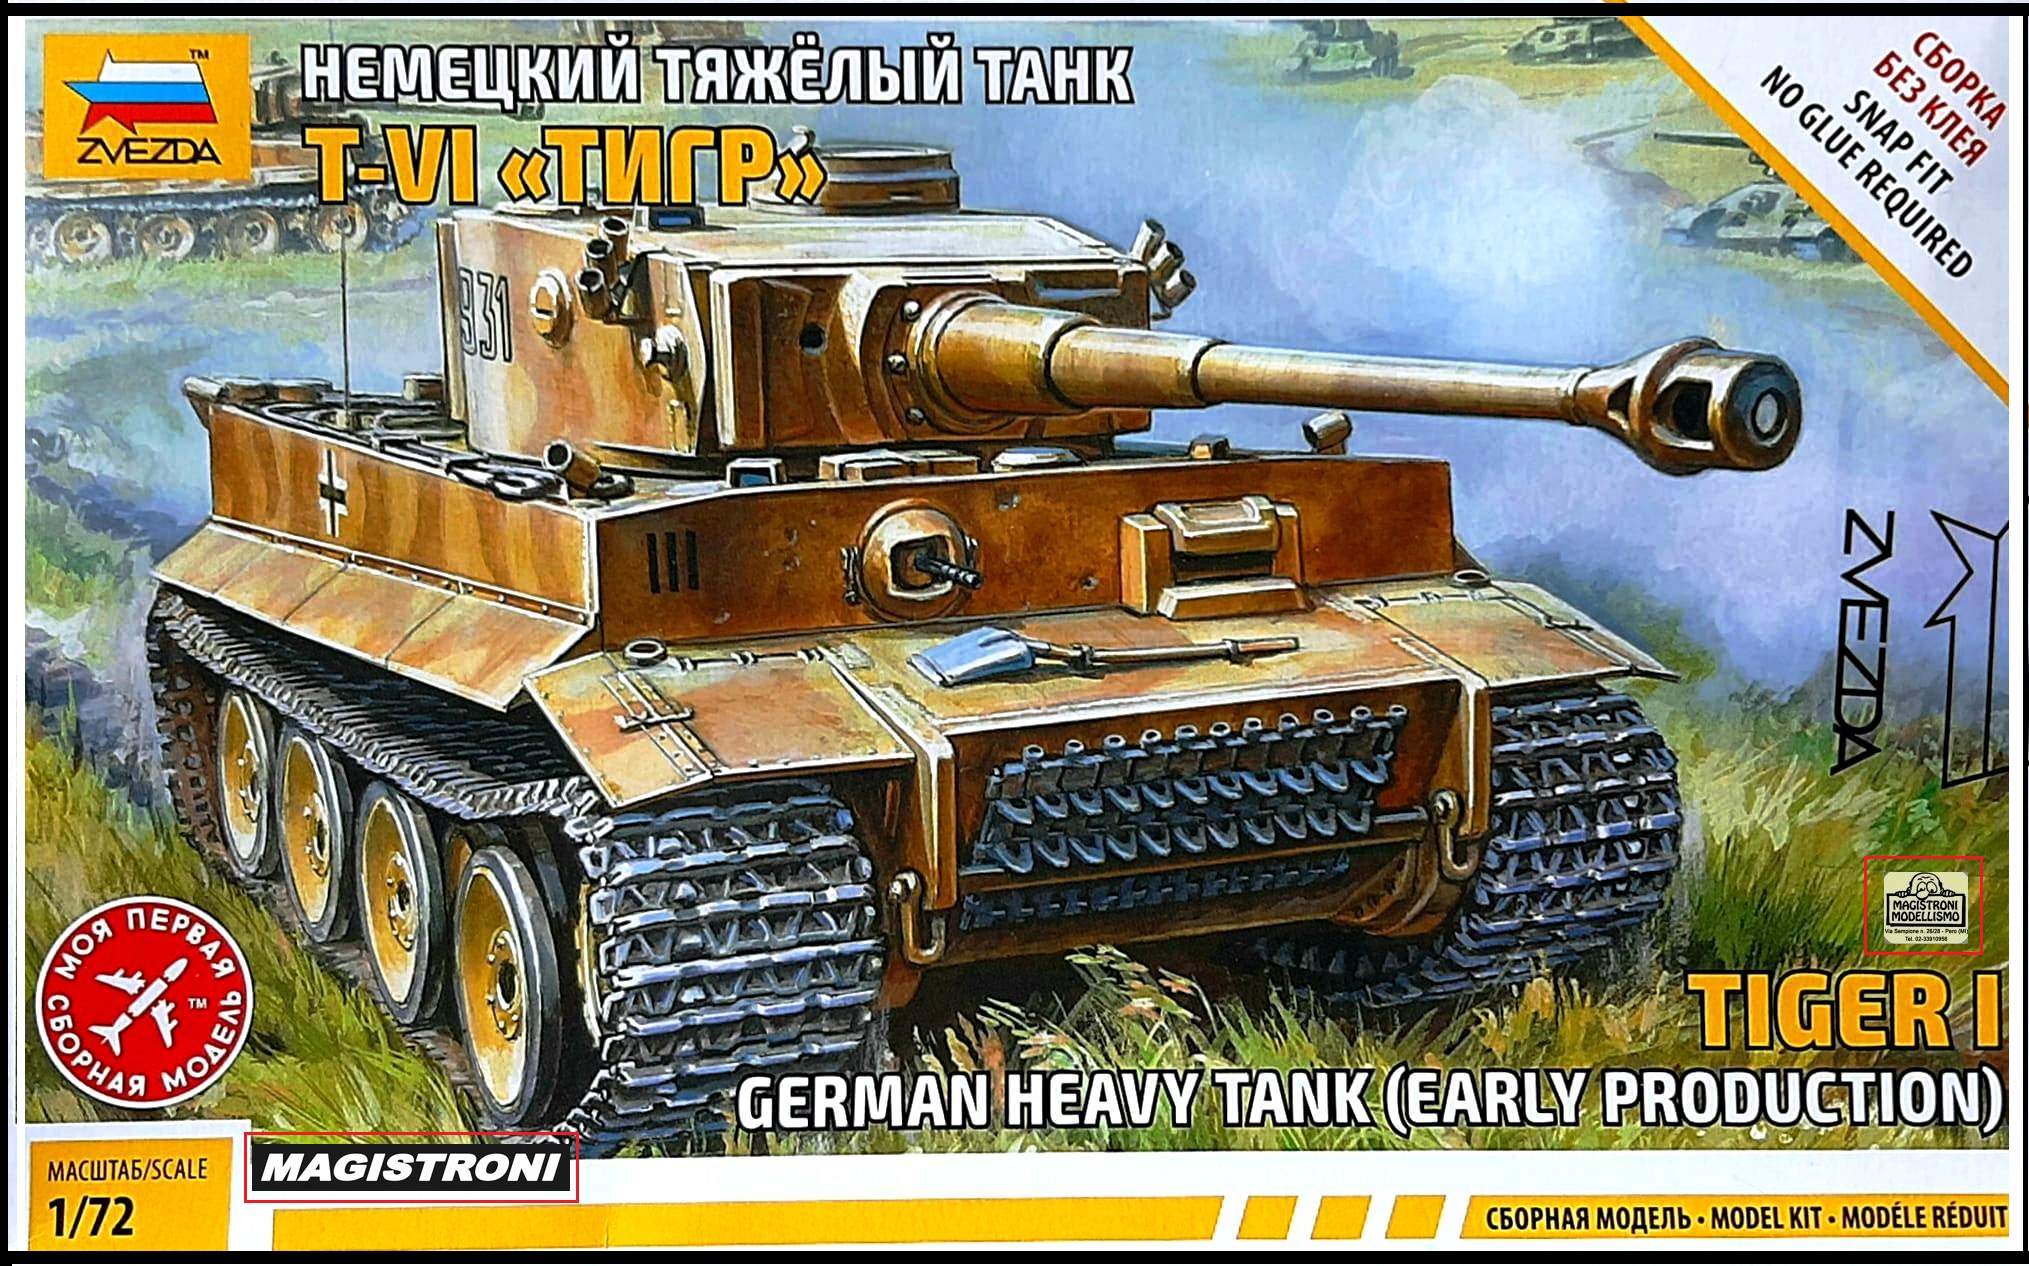 GERMAN HEAVY TANK (EARLY PRODUCTION) TIGER I